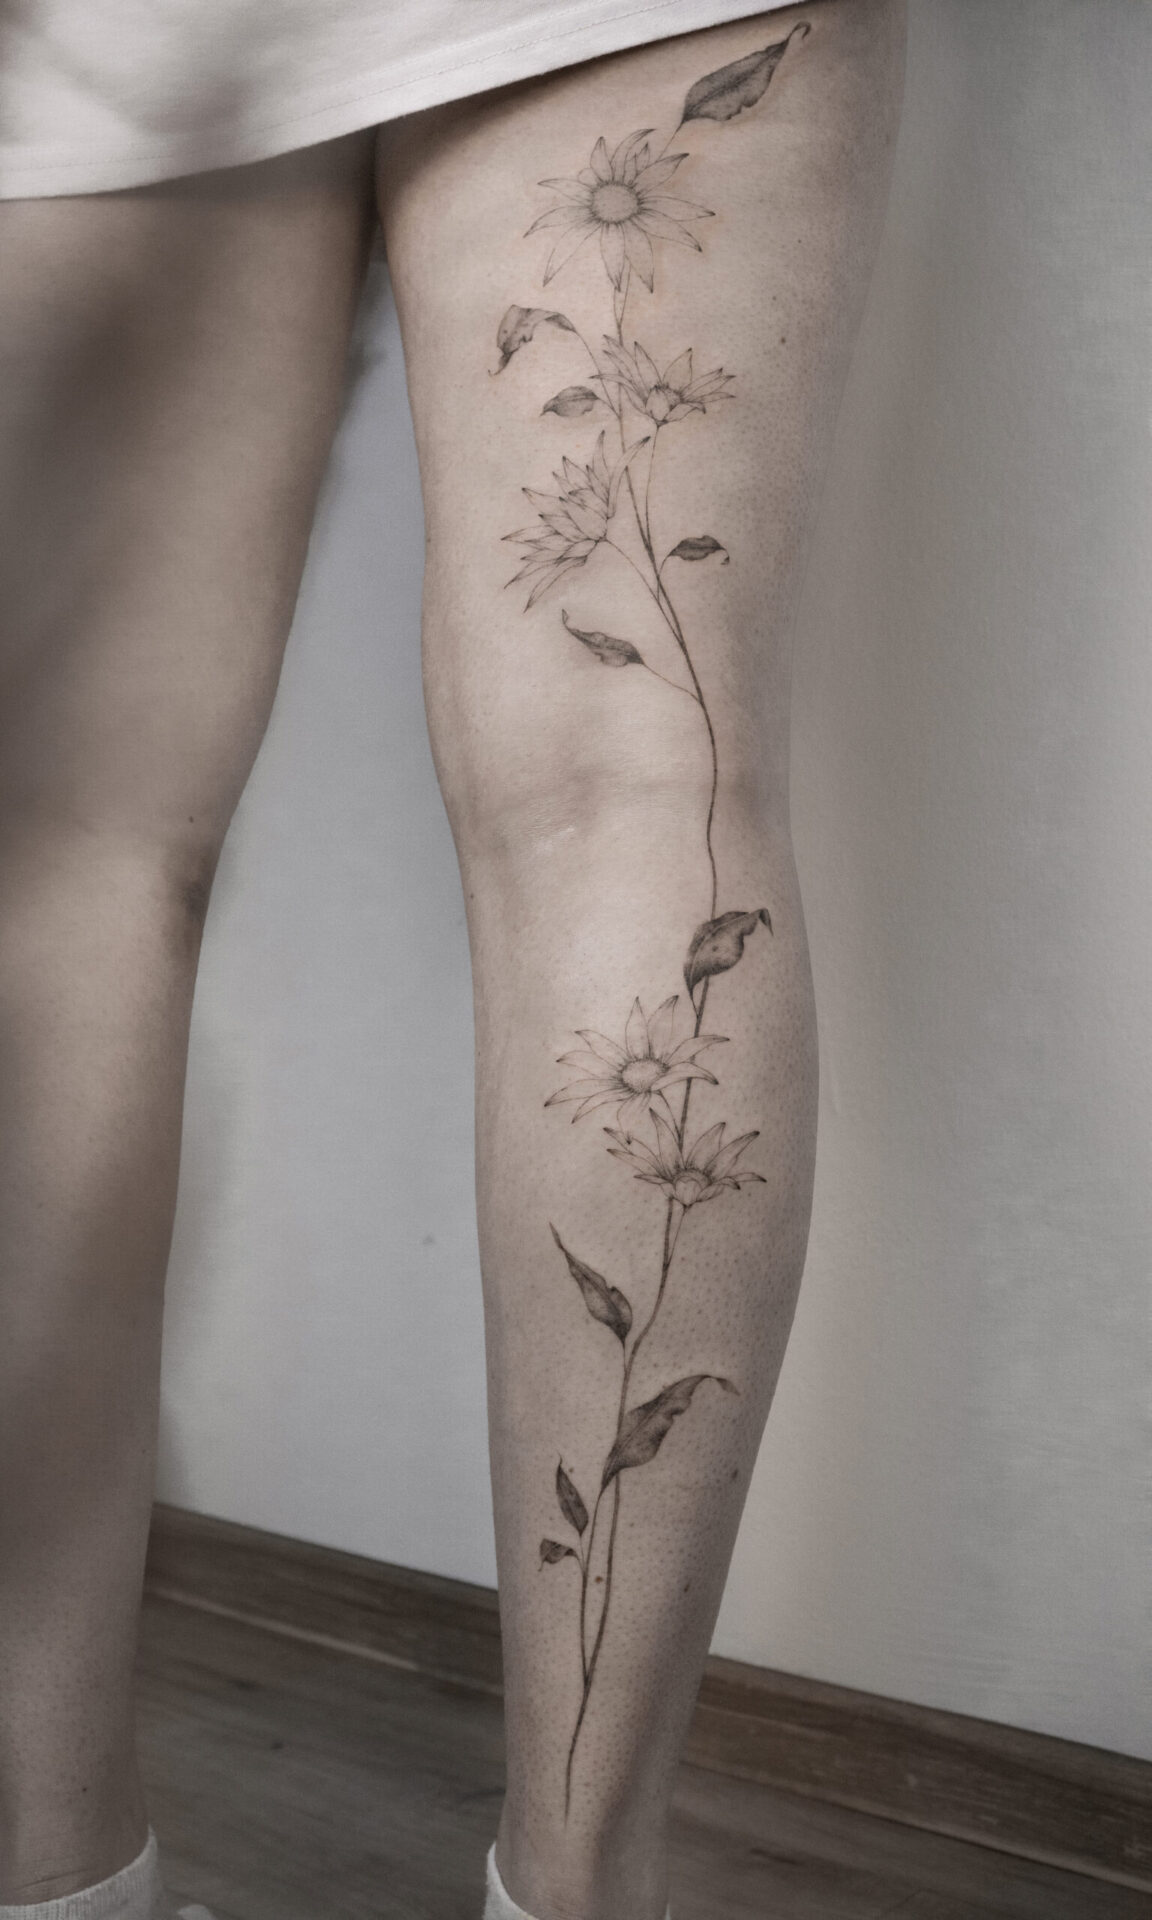 fineline flower tattoo whole leg from smasli ink an female tattoo artist working in salzburg austria